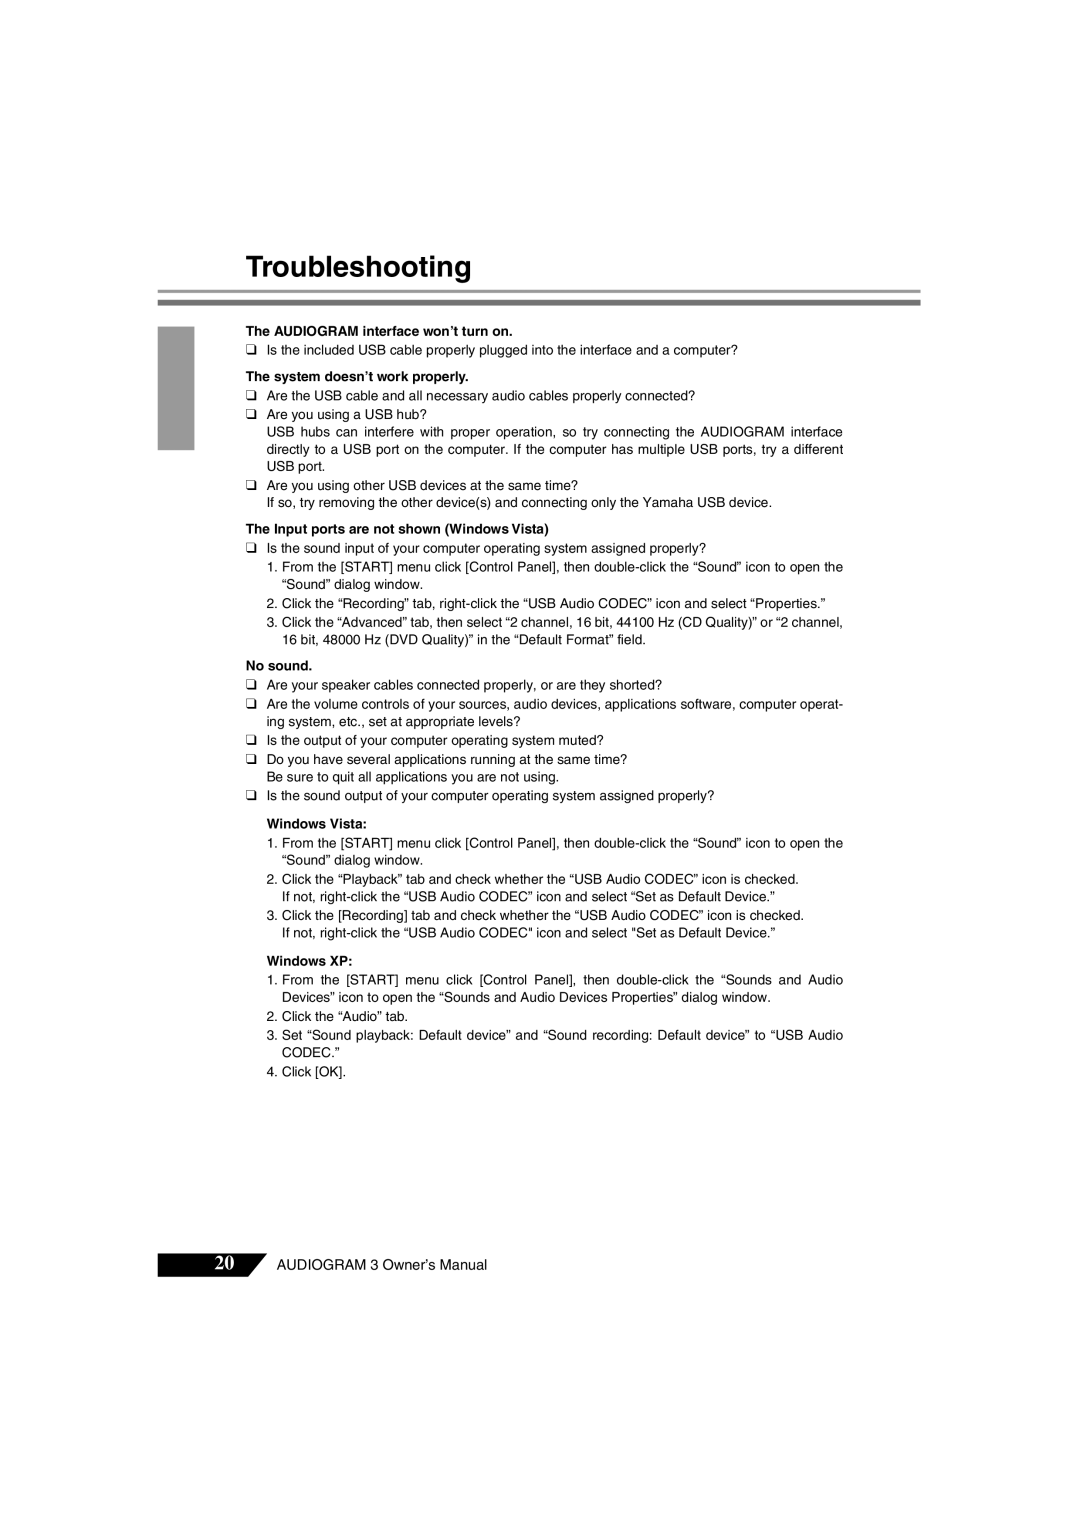 Yamaha Audiogram 3 owner manual Troubleshooting 